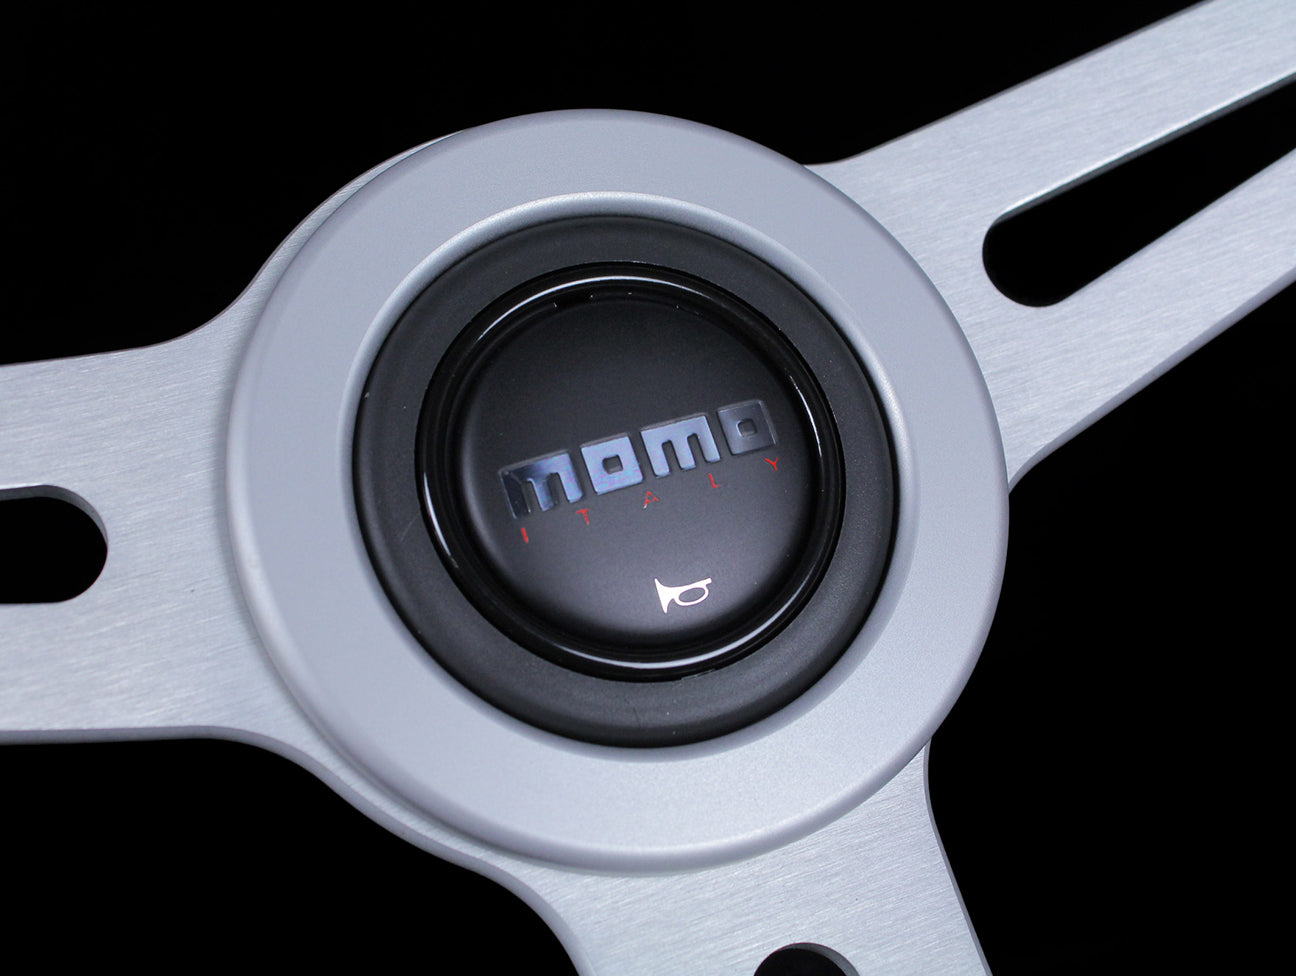 Momo Retro 360mm Steering Wheel - JDM Honda Parts USA – JHPUSA